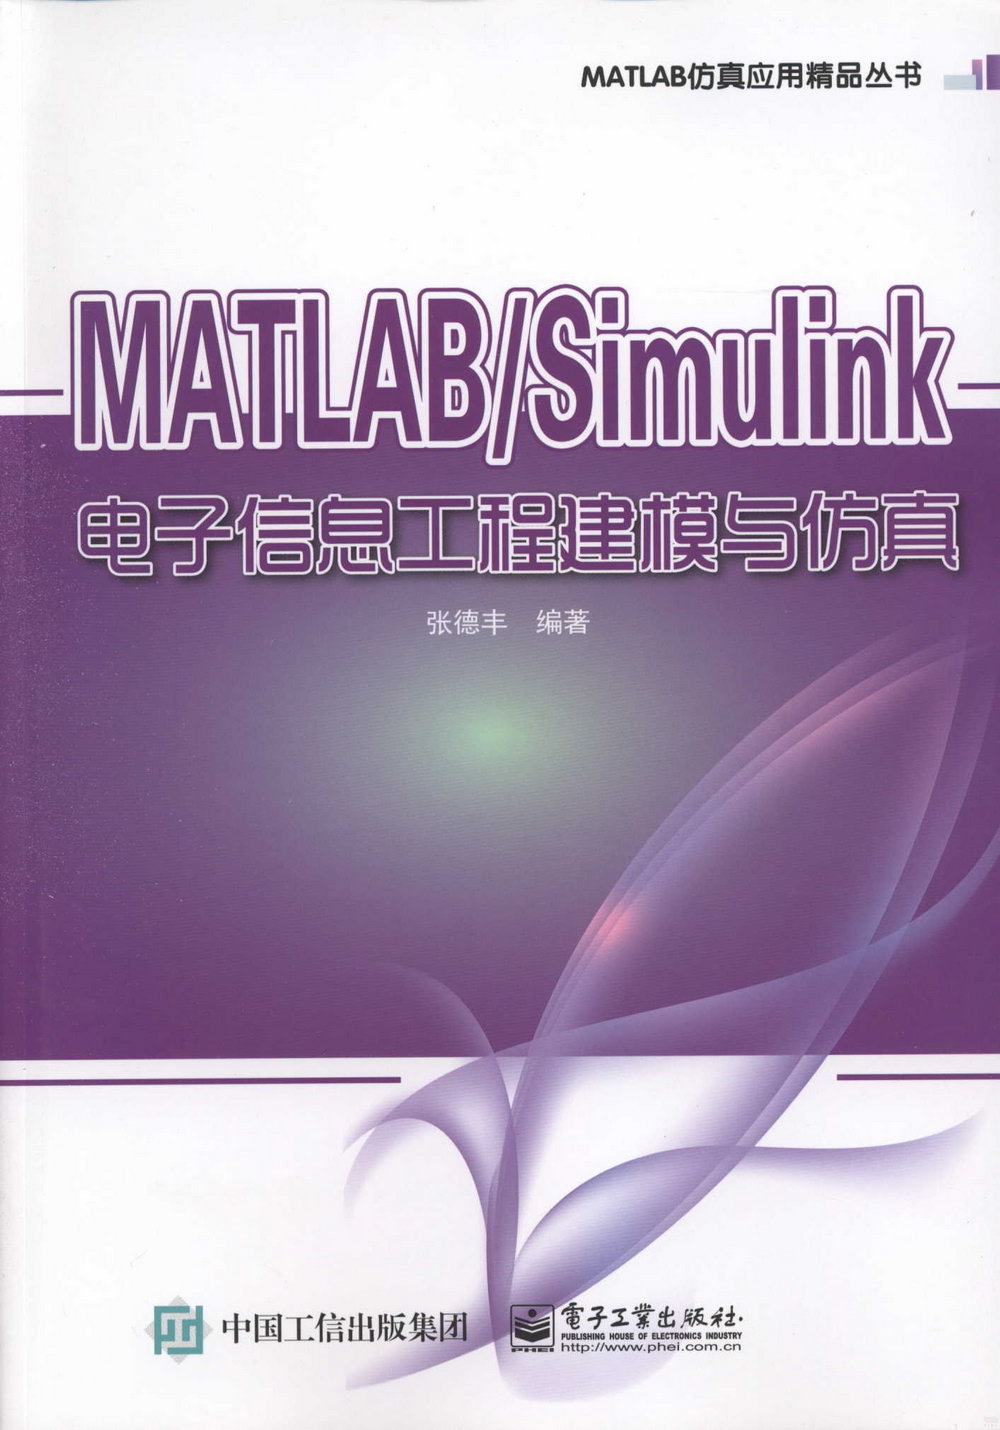 MATLAB/Simulink電子信息工程建模與仿真